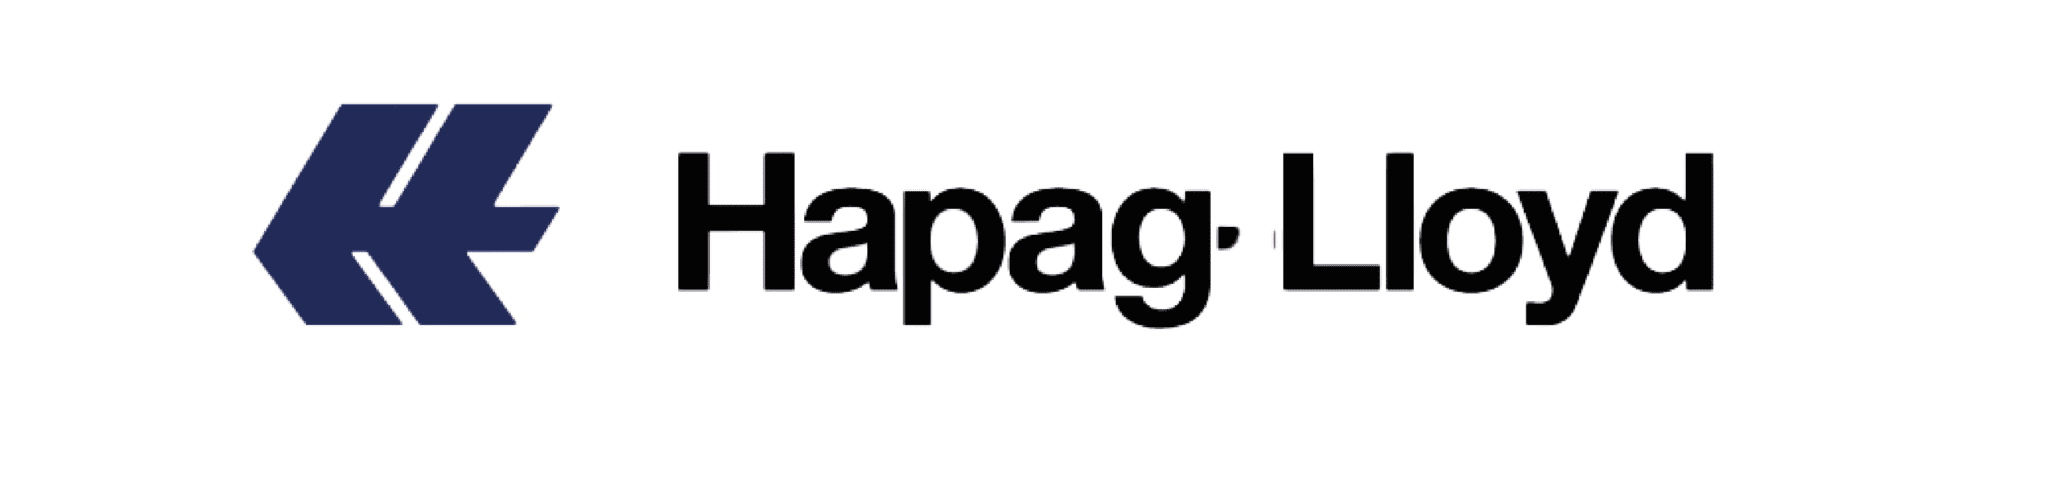 Hapaglloyd_Base logos pagina web_Mesa de trabajo 1